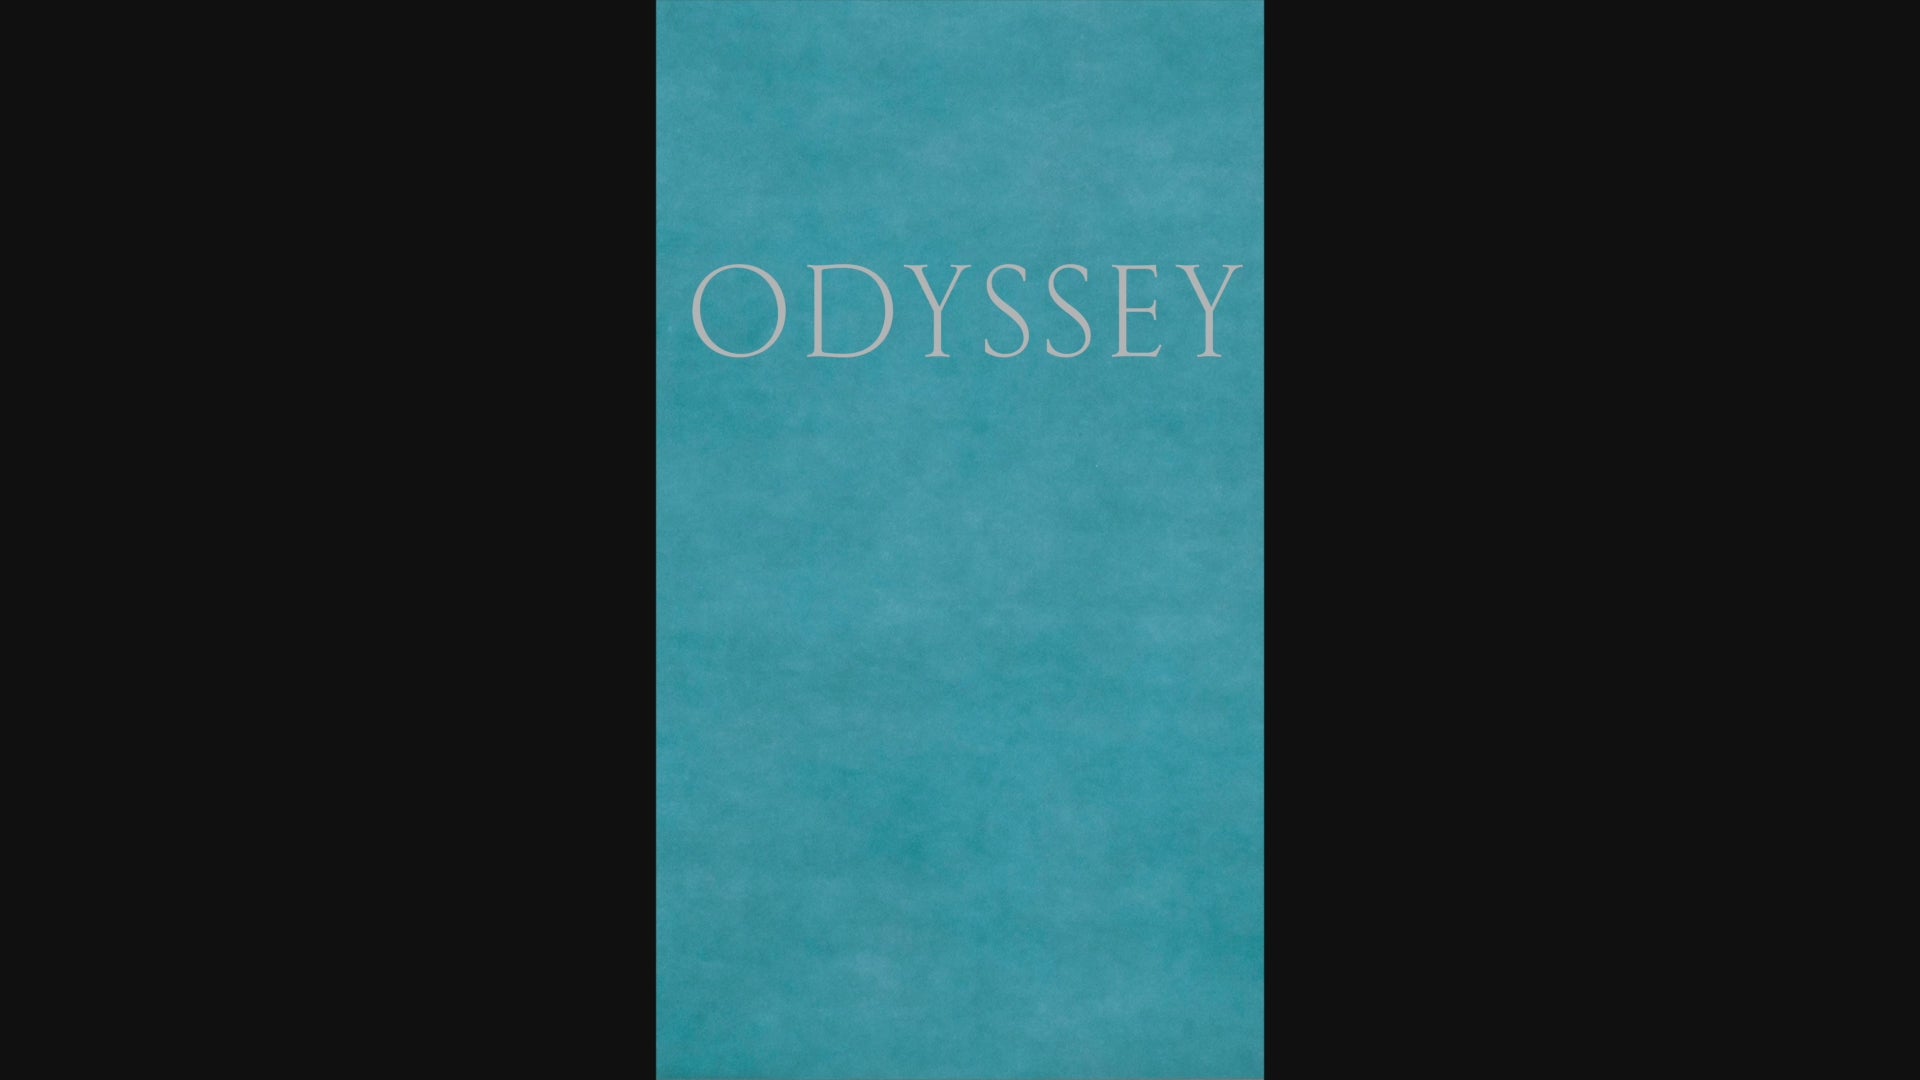 Christopher Anderson - Odyssey – Yvon Lambert Paris